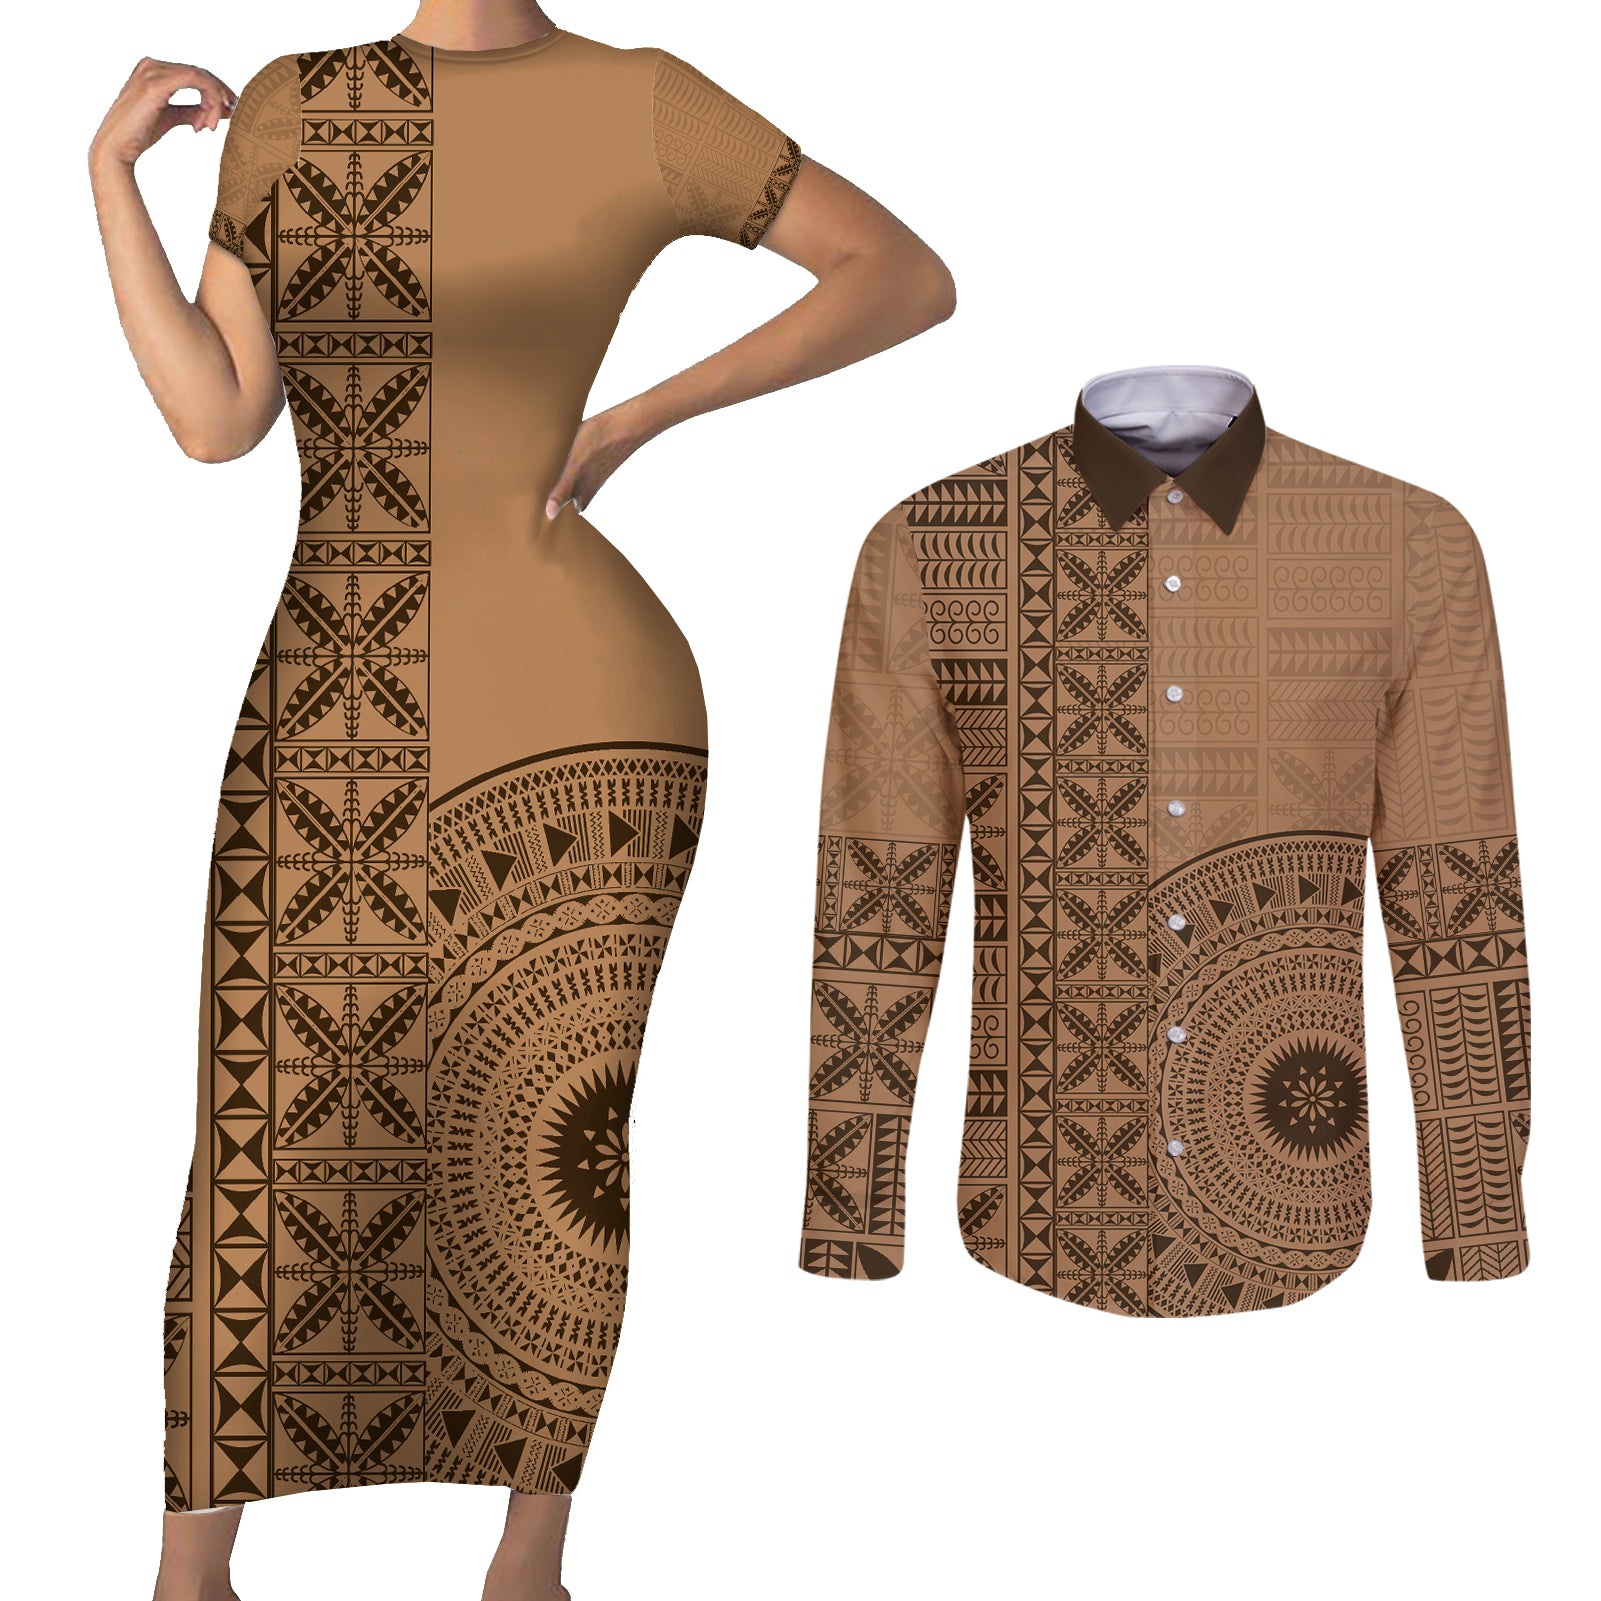 Fakaalofa Lahi Atu Niue Couples Matching Short Sleeve Bodycon Dress and Long Sleeve Button Shirt Vintage Hiapo Pattern Brown Version LT14 Brown - Polynesian Pride